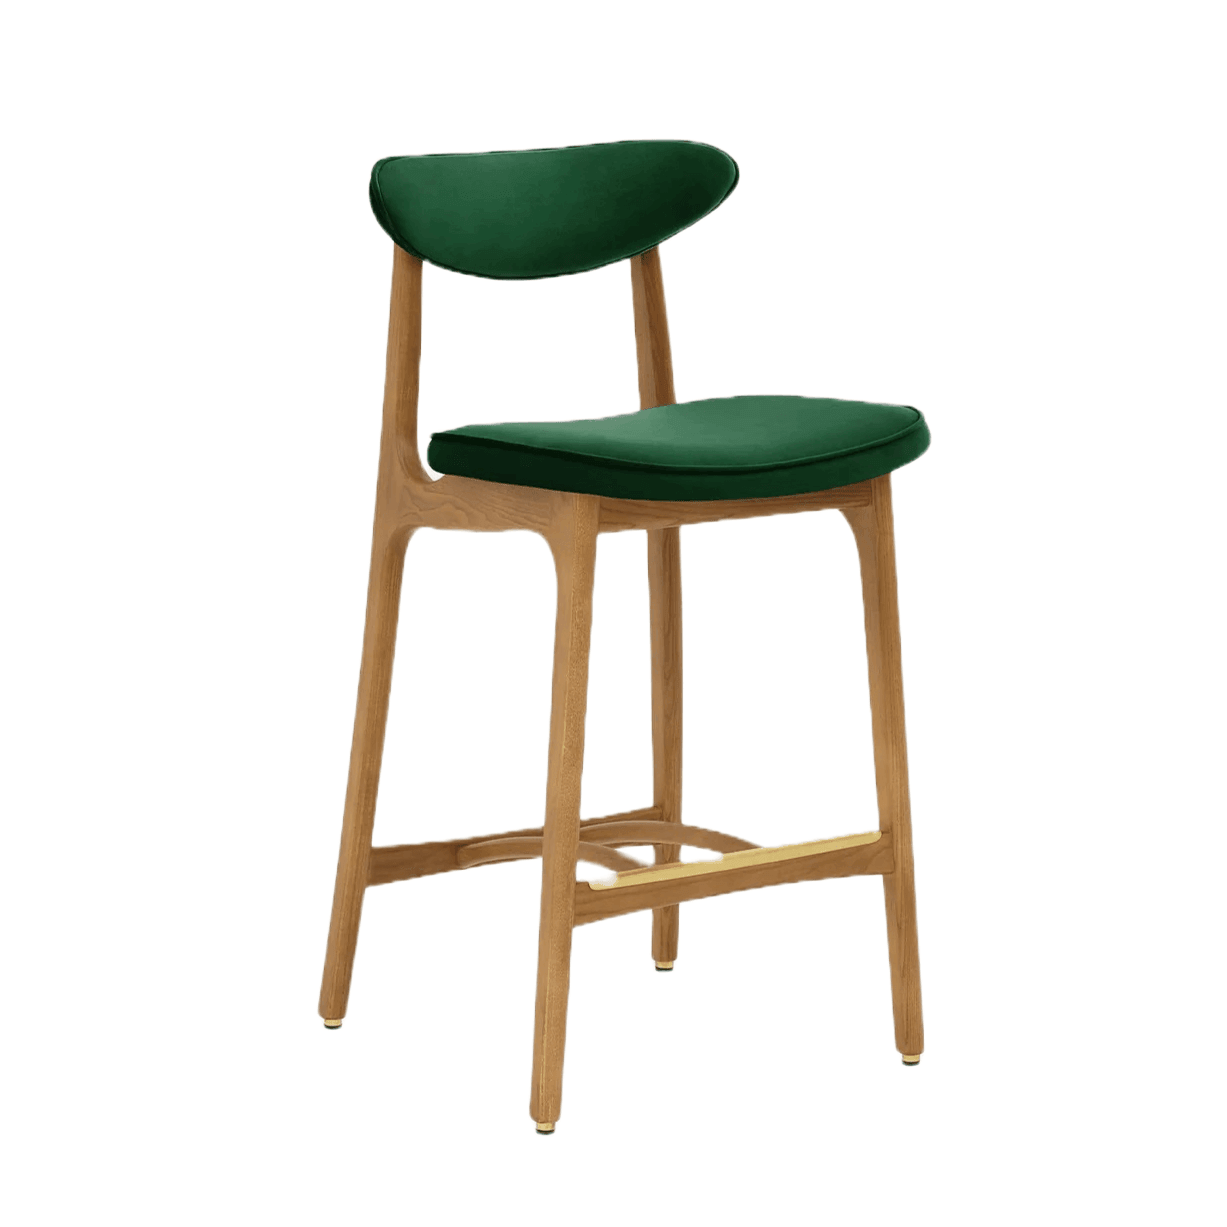 Krzesło barowe 200-190 zielony w tkaninie Velvet Bottle Green 366 concept    Eye on Design